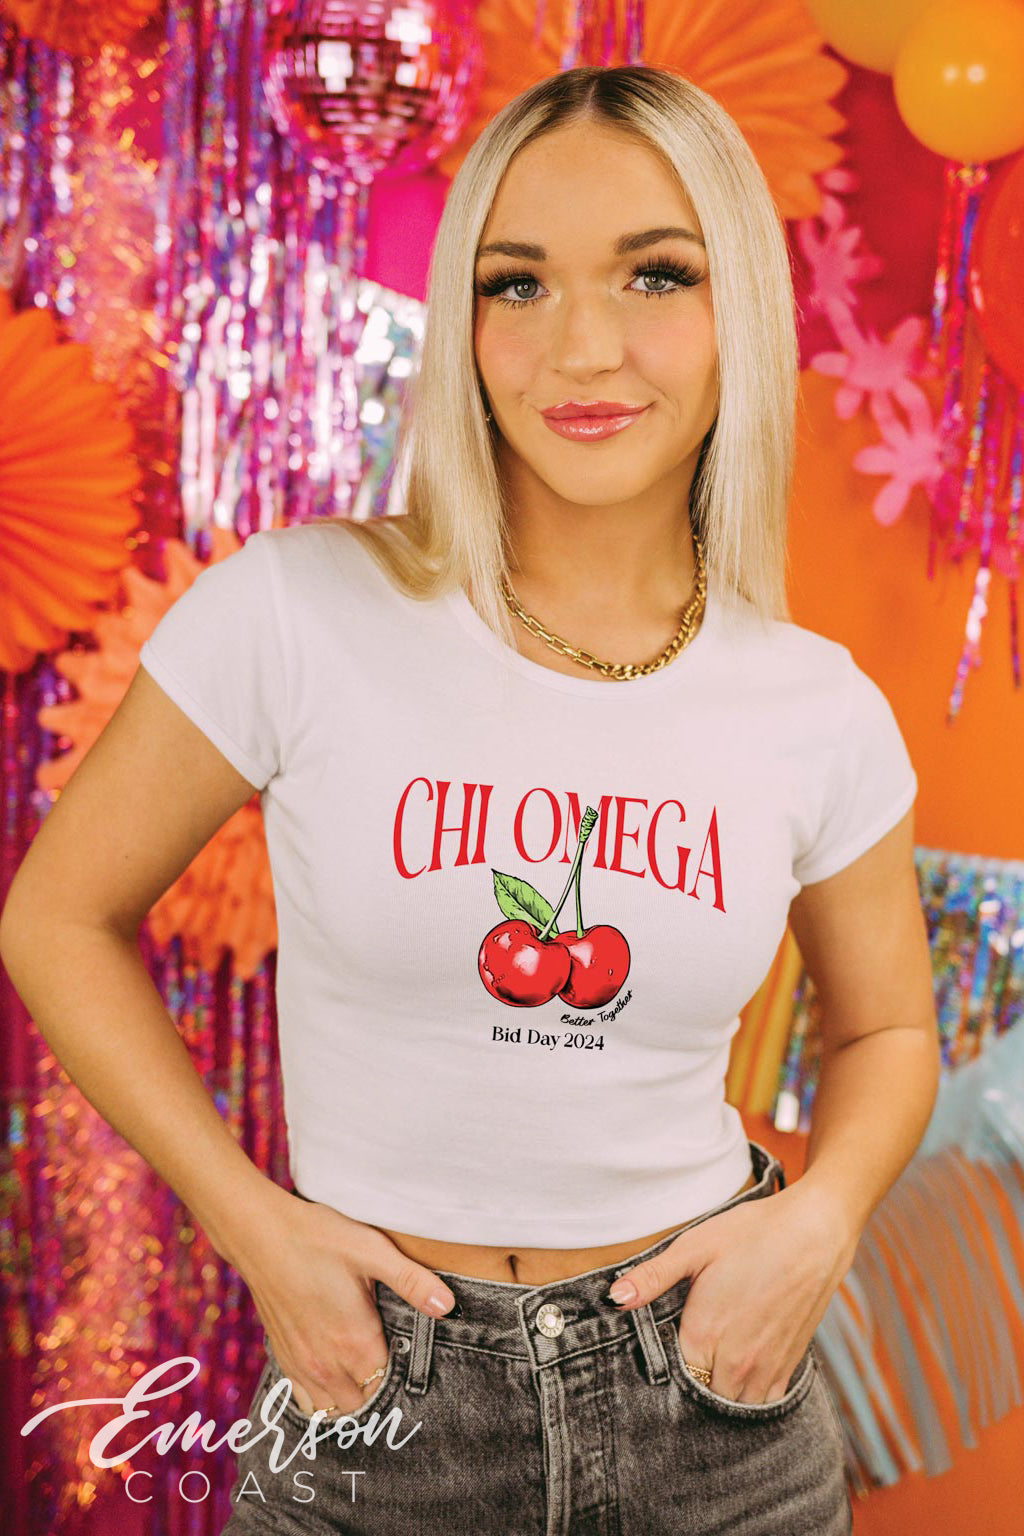 Chi Omega Cherry Bomb Bid Day Baby Tee